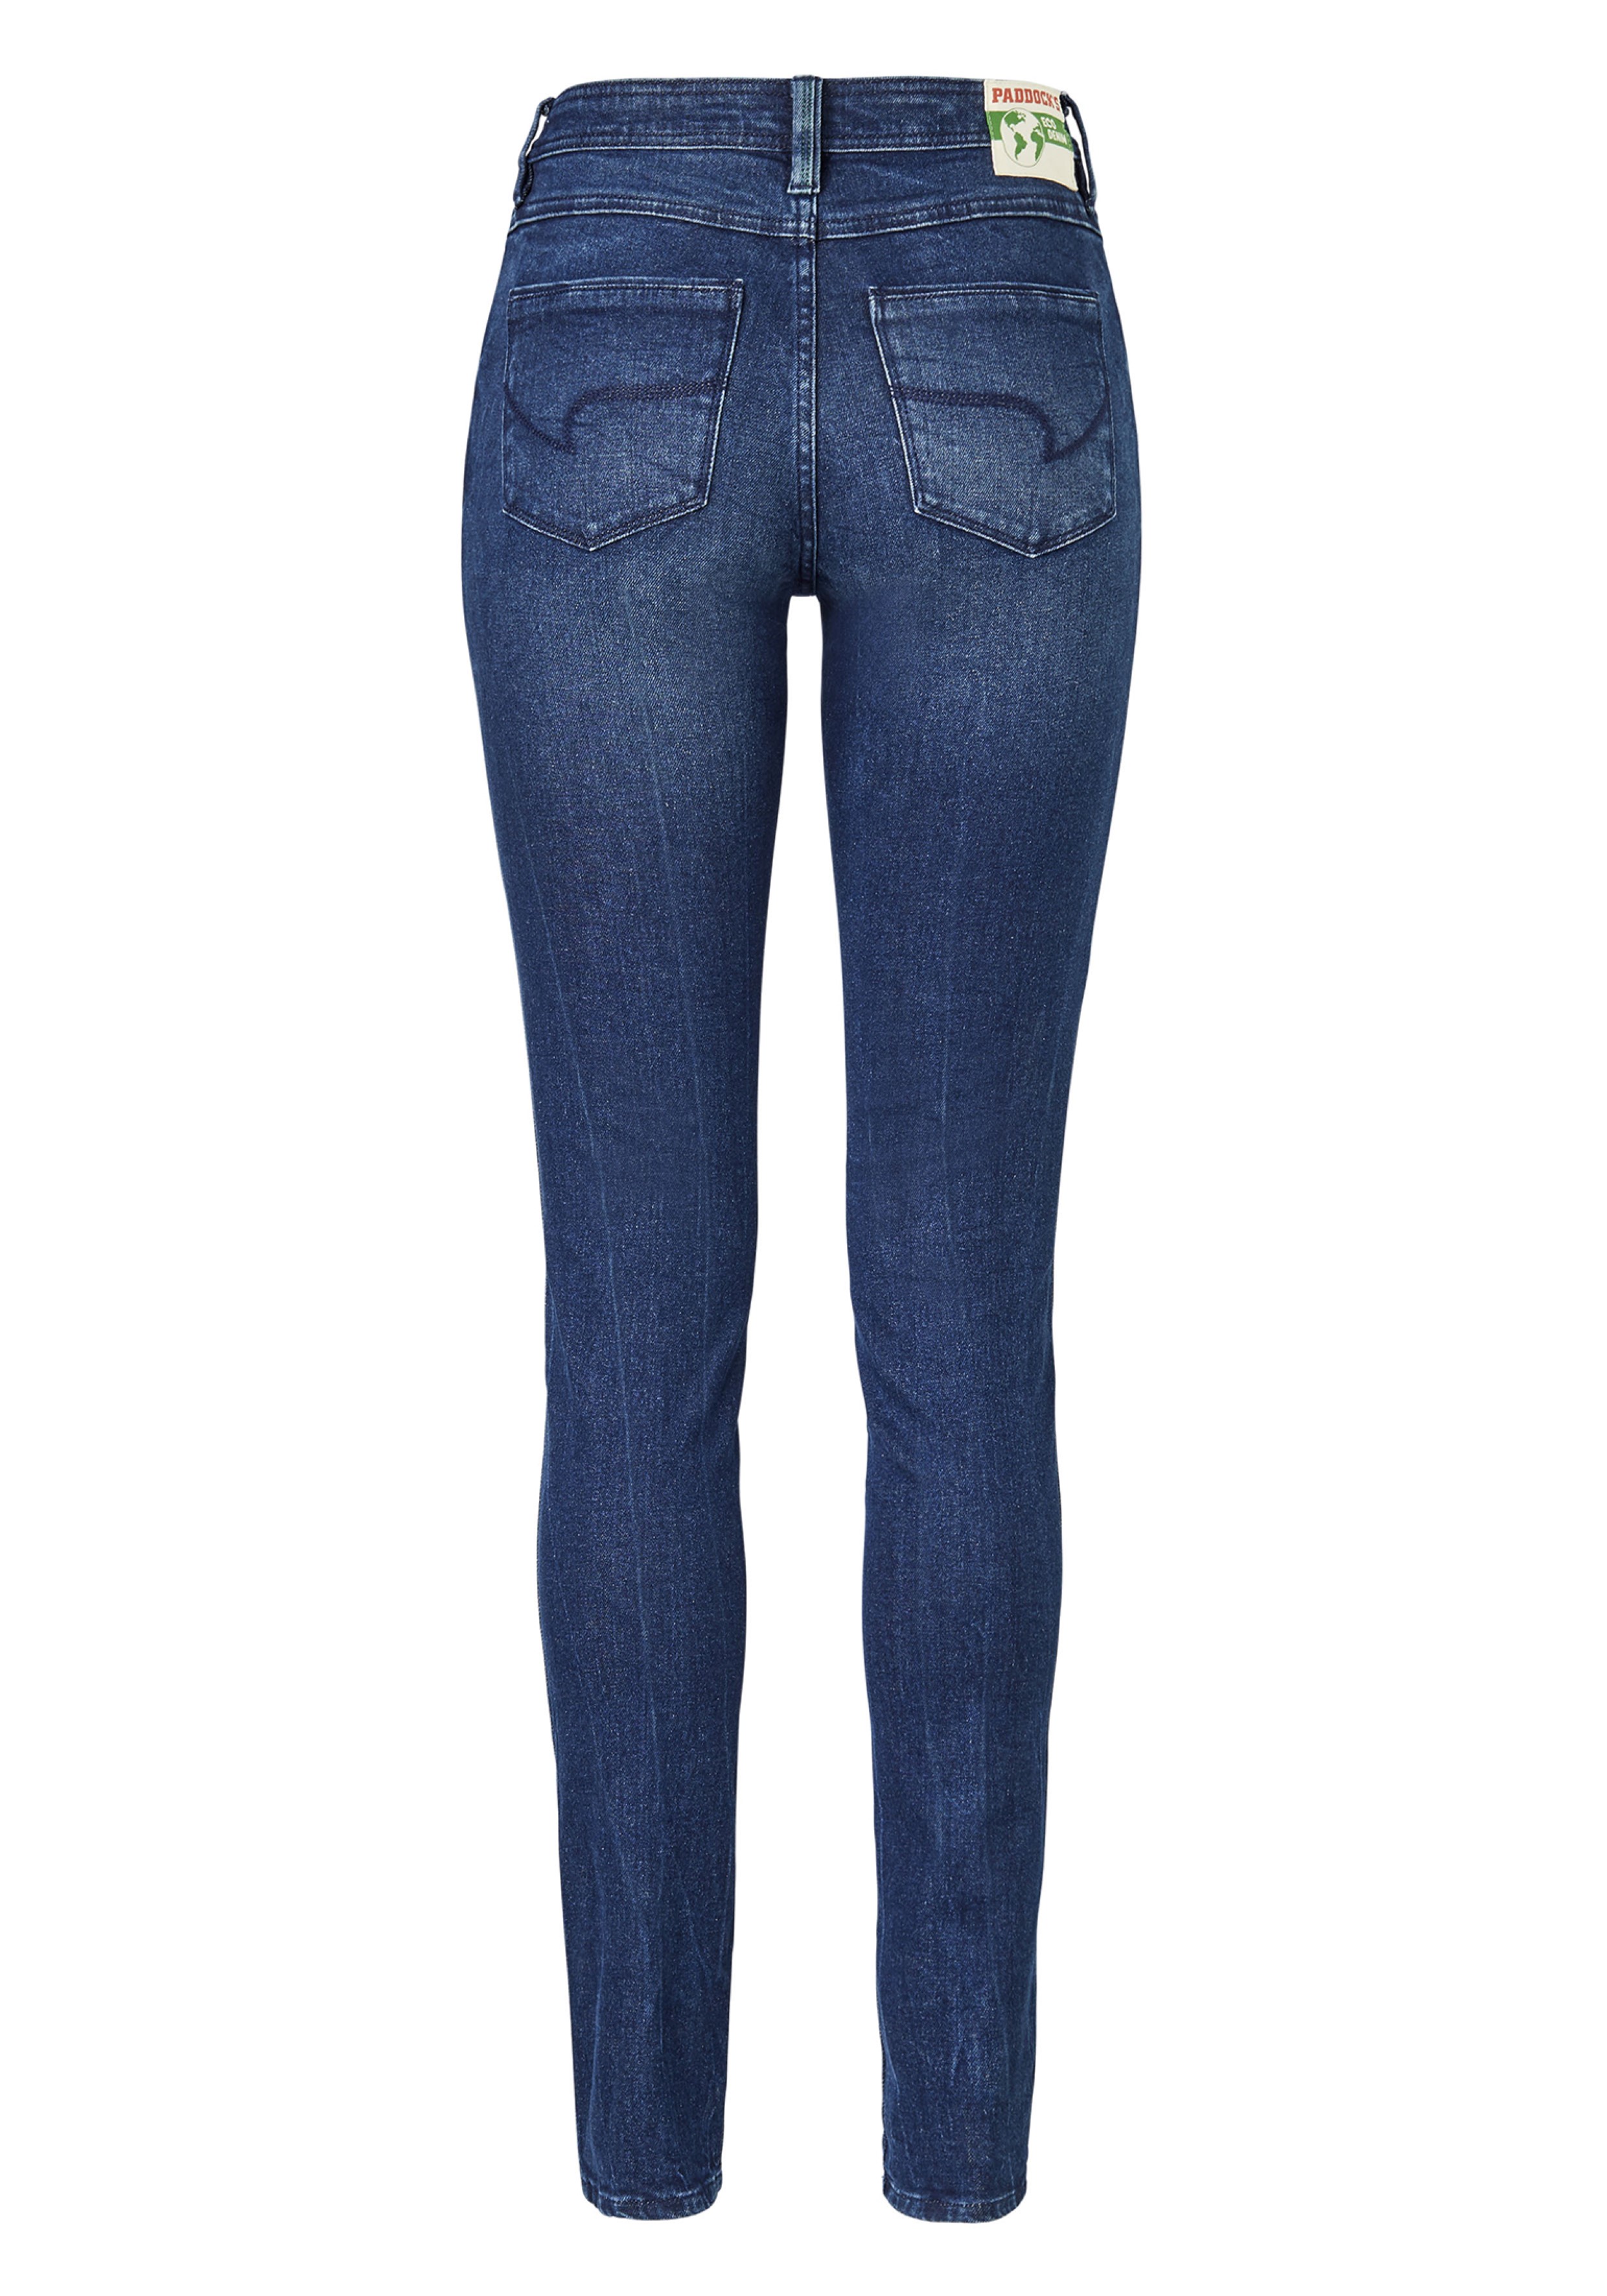 604366112000-4482_2-paddocks-damen-jeans-blau.jpg